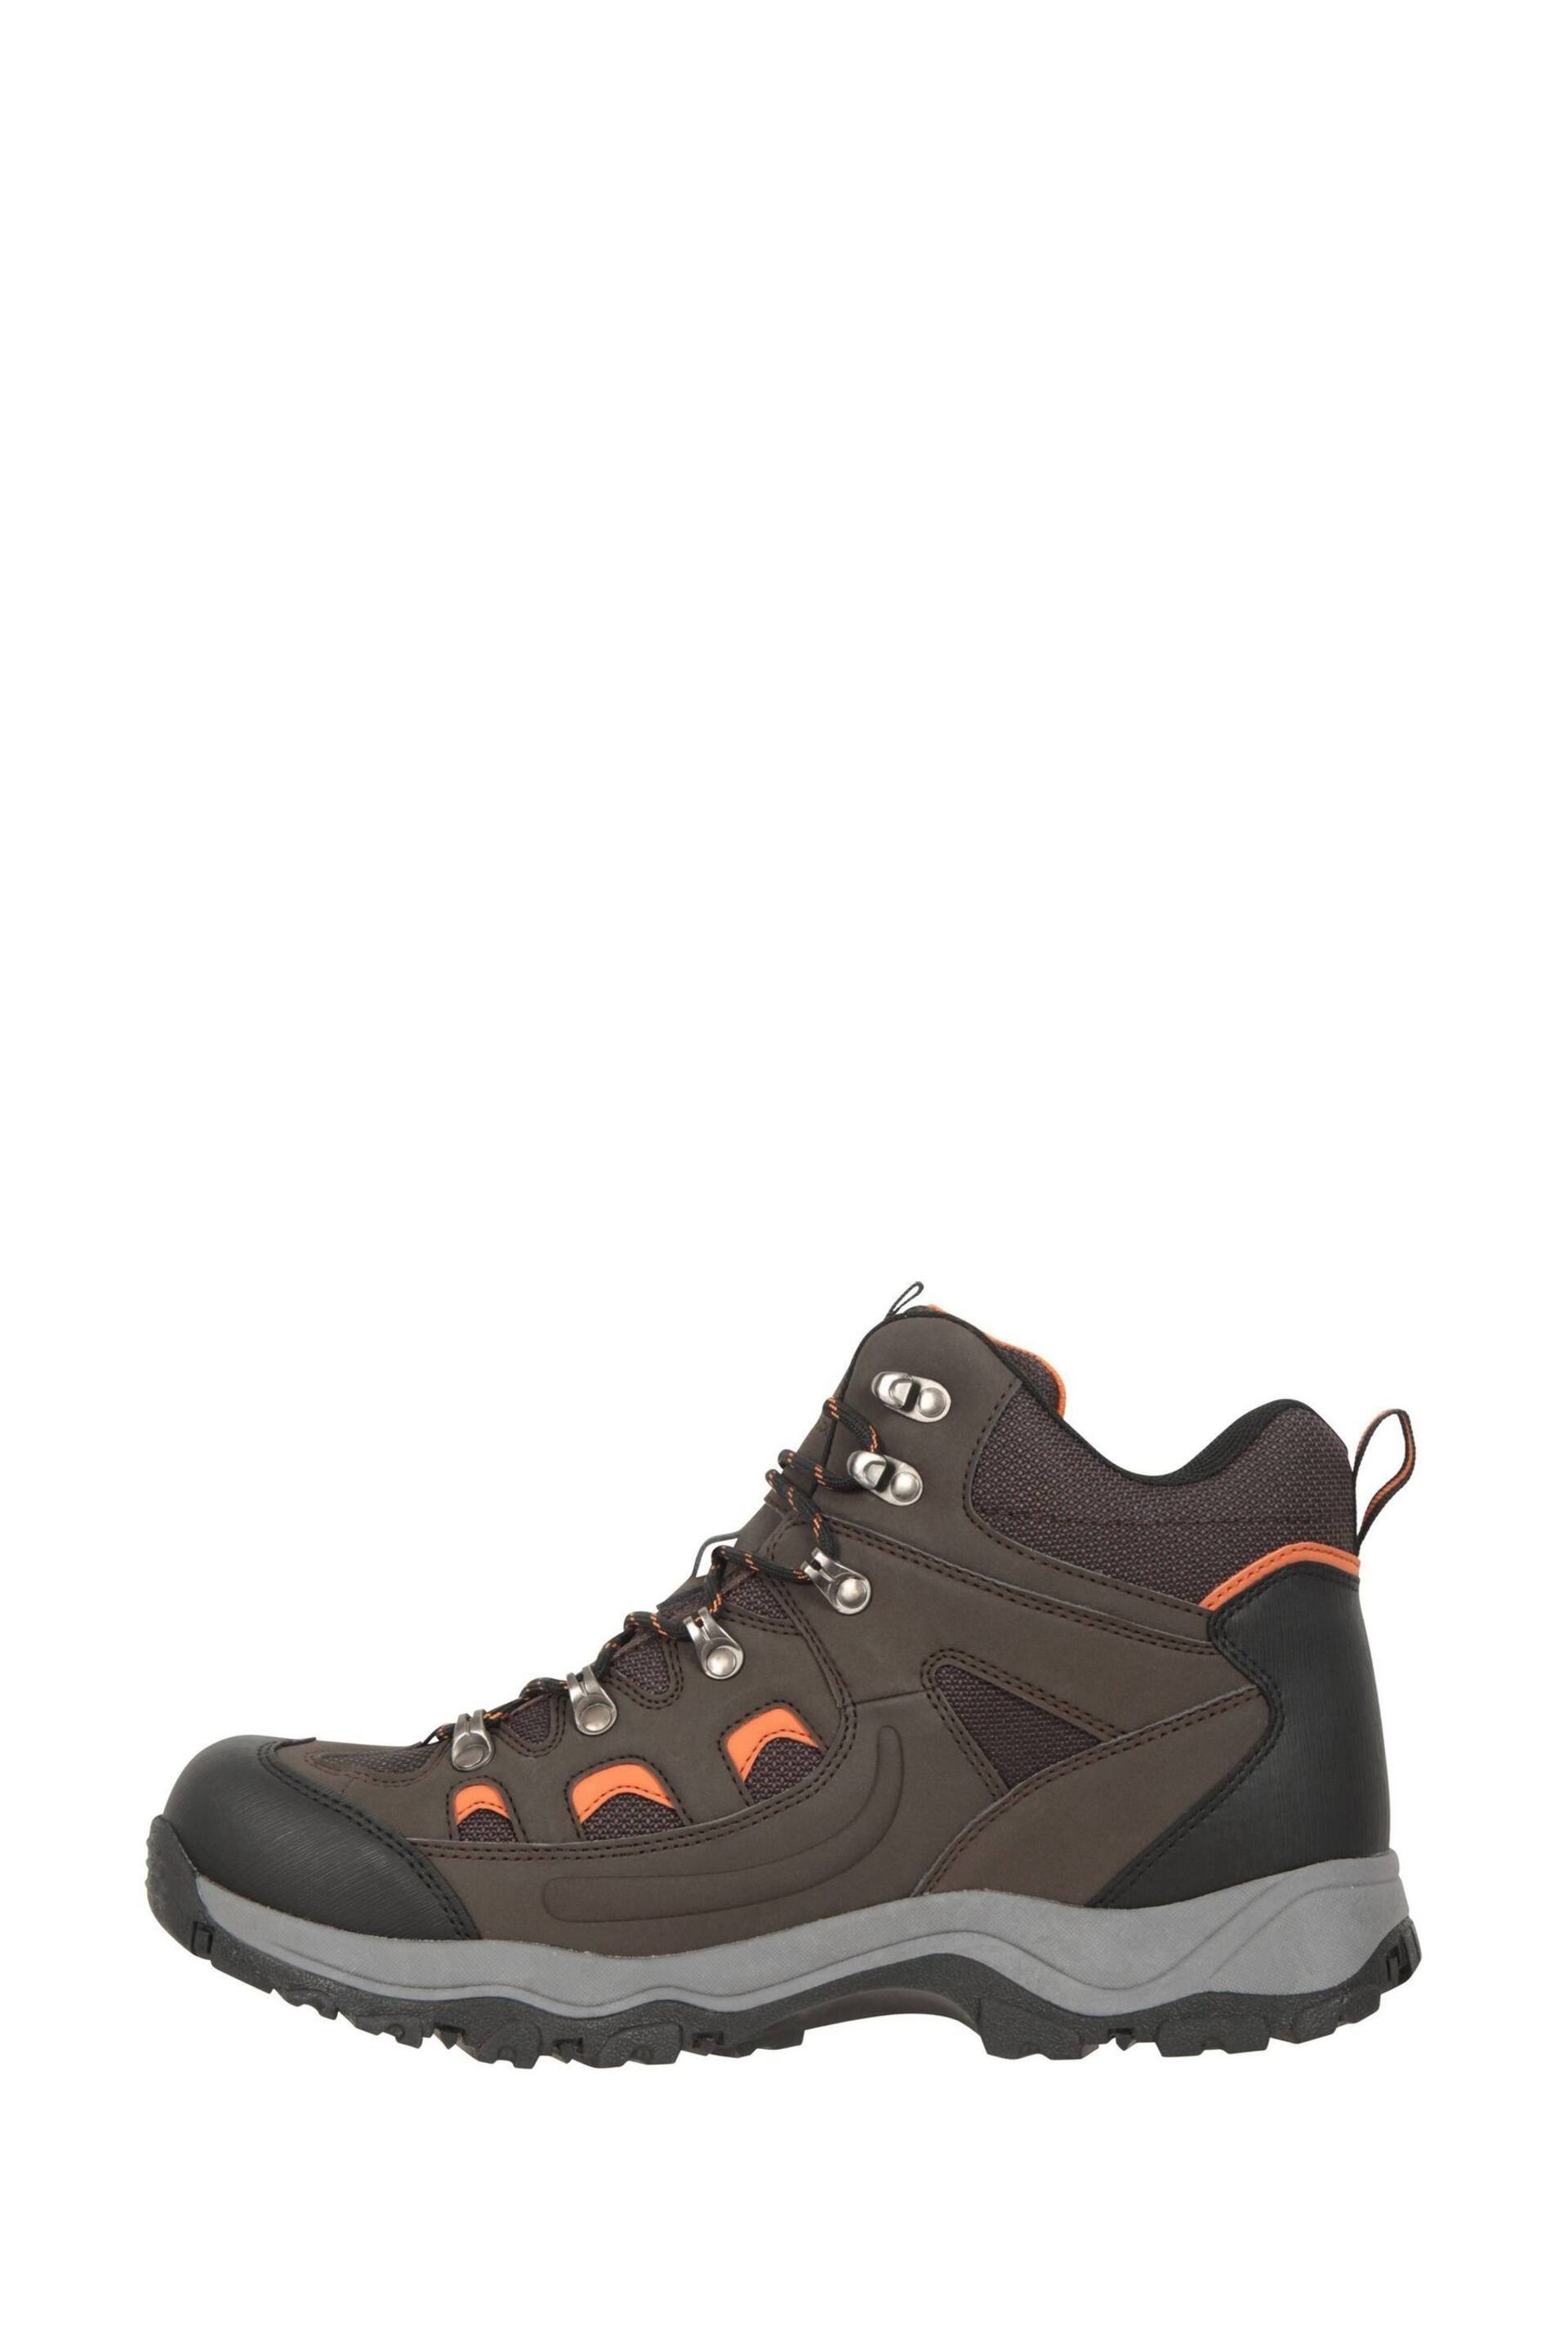 Mountain Warehouse Brown Adventurer Mens Waterproof Walking Boots - Image 2 of 4